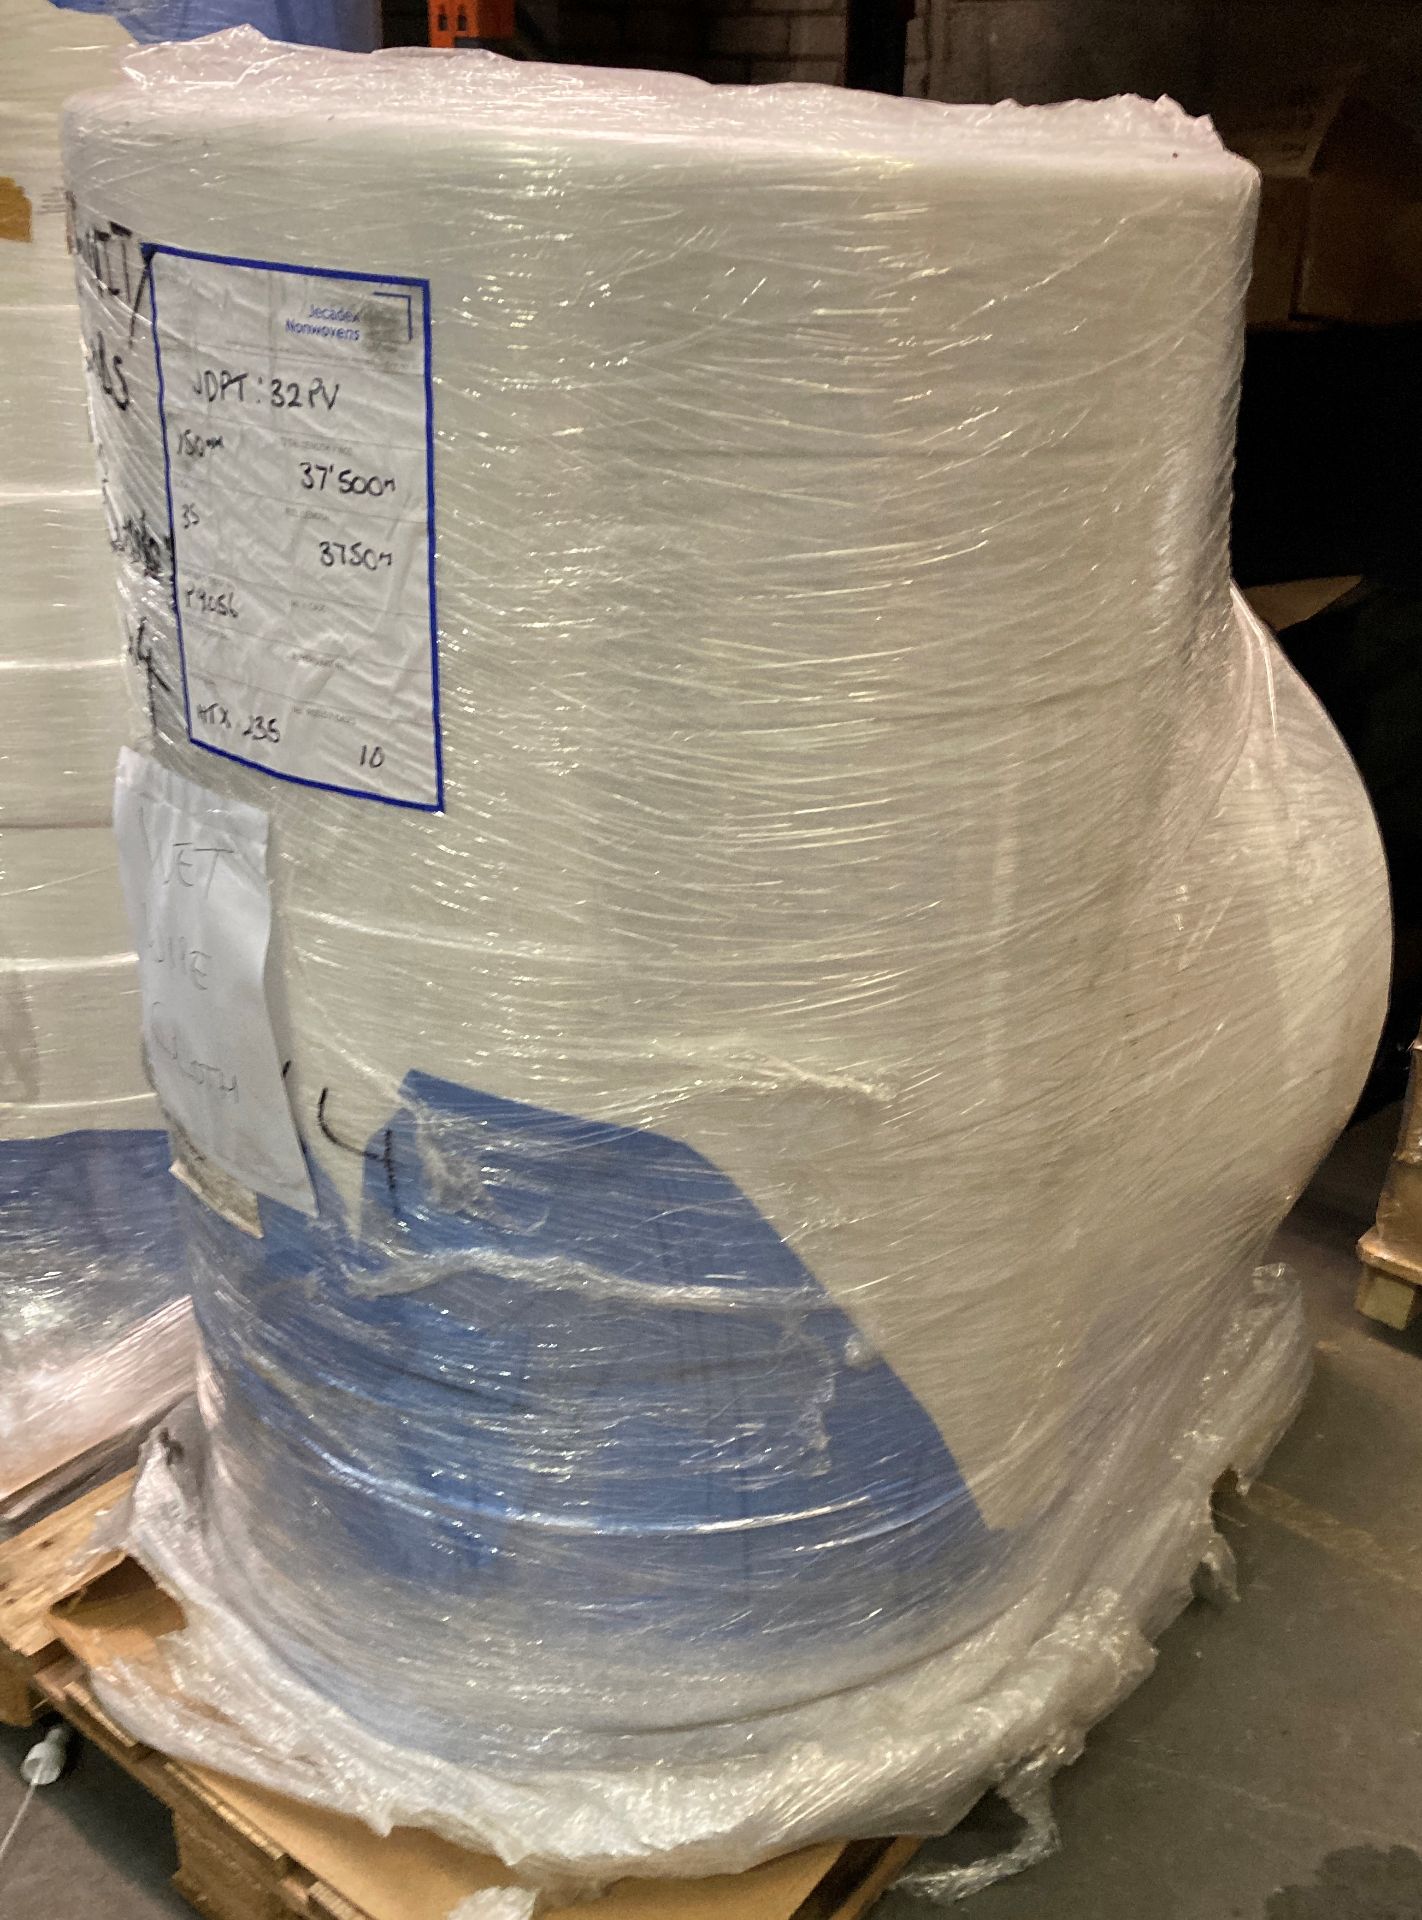 10 x Rolls of JDPT: 32PV Wet Wipe Tissue | 150mm x 3750m